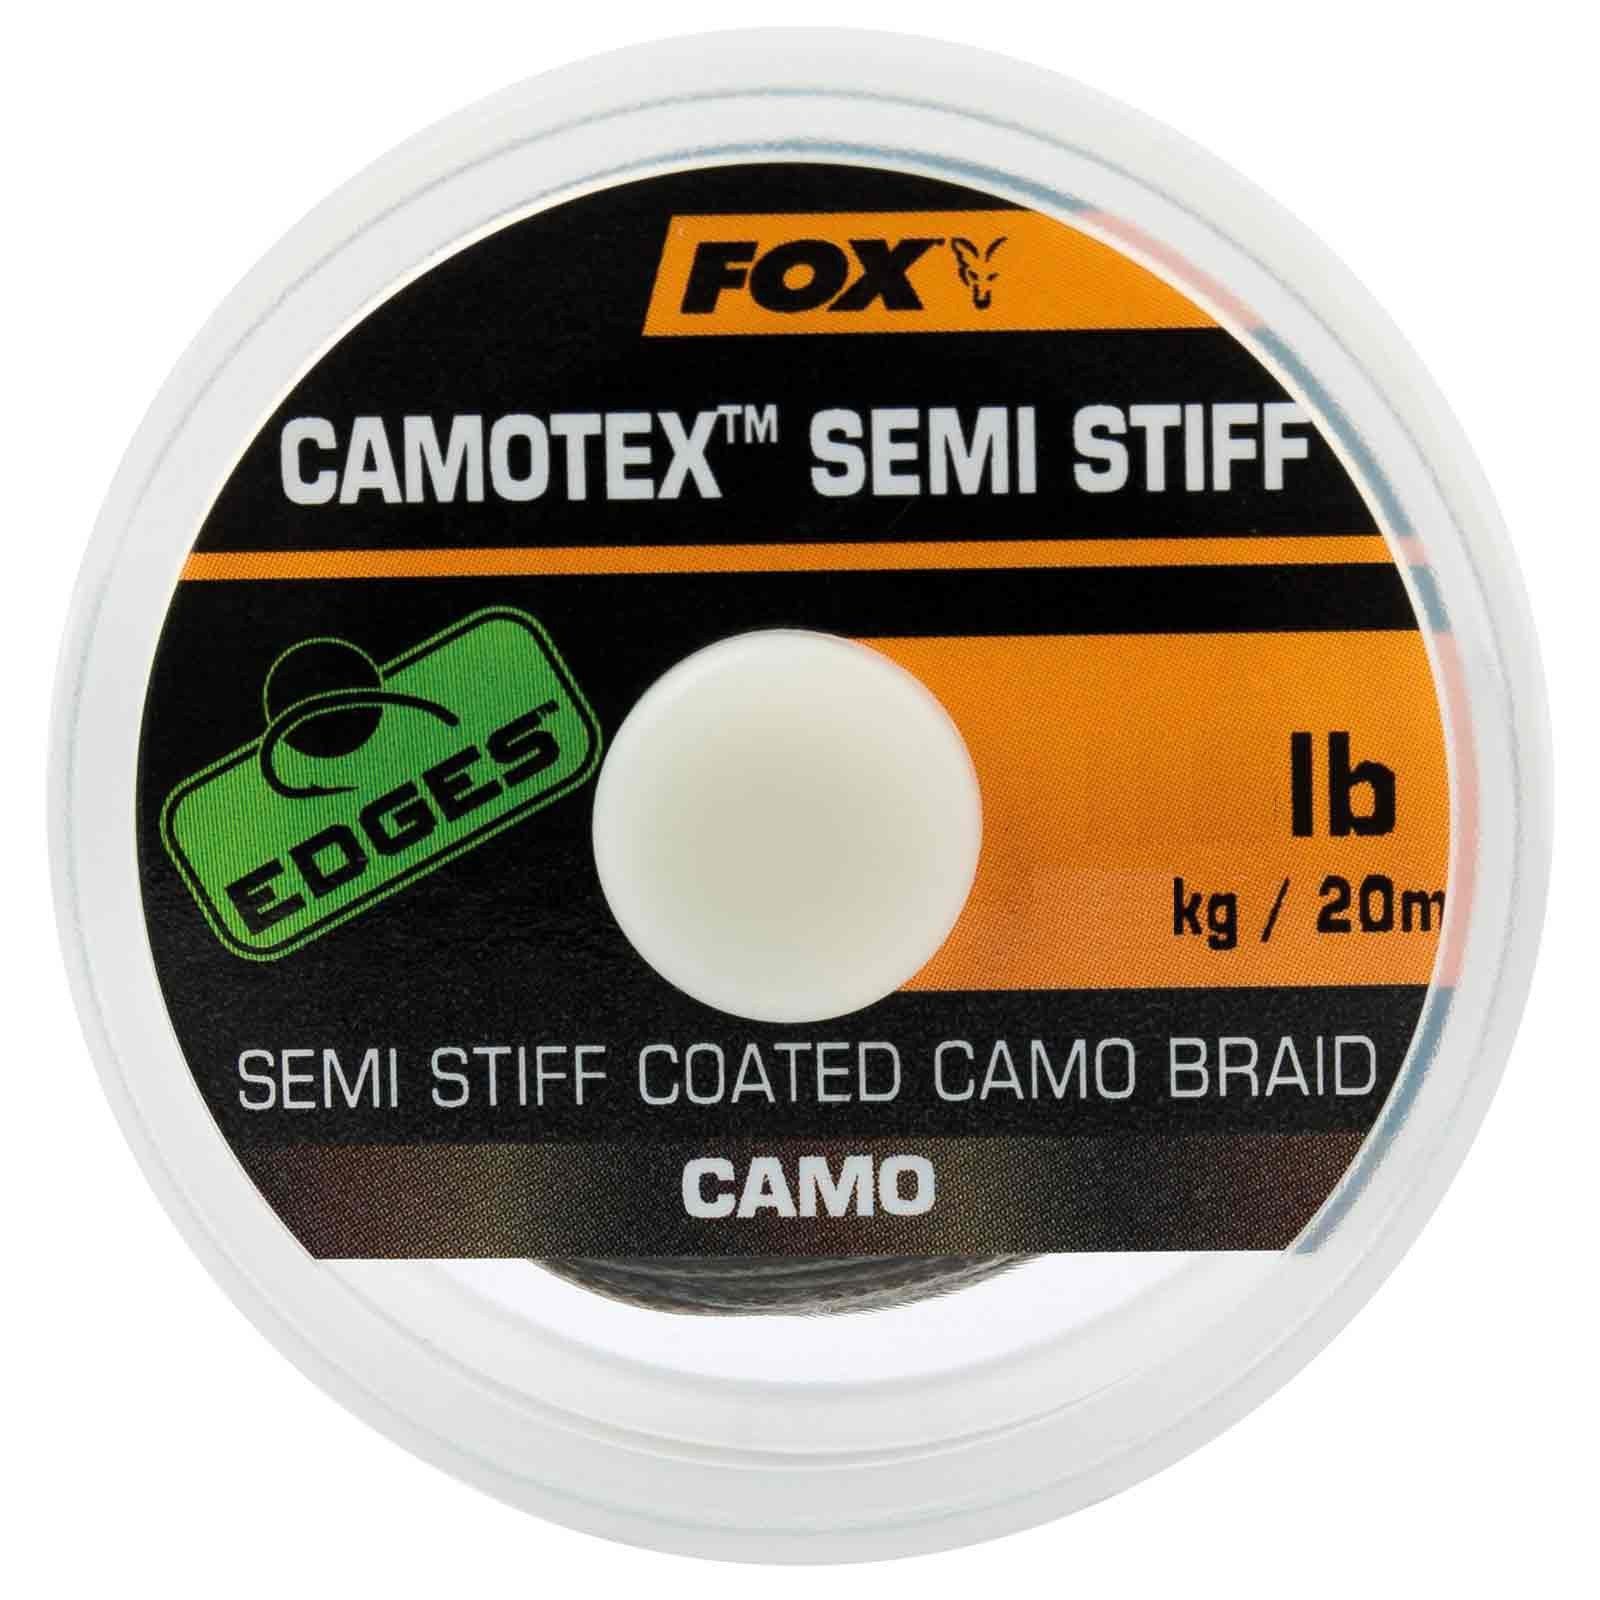 20 Coated Camo Fox 20m Länge, Vorfachschnur, Vorfachmaterial Braid Stiff Camotex m 25lb Fox Semi